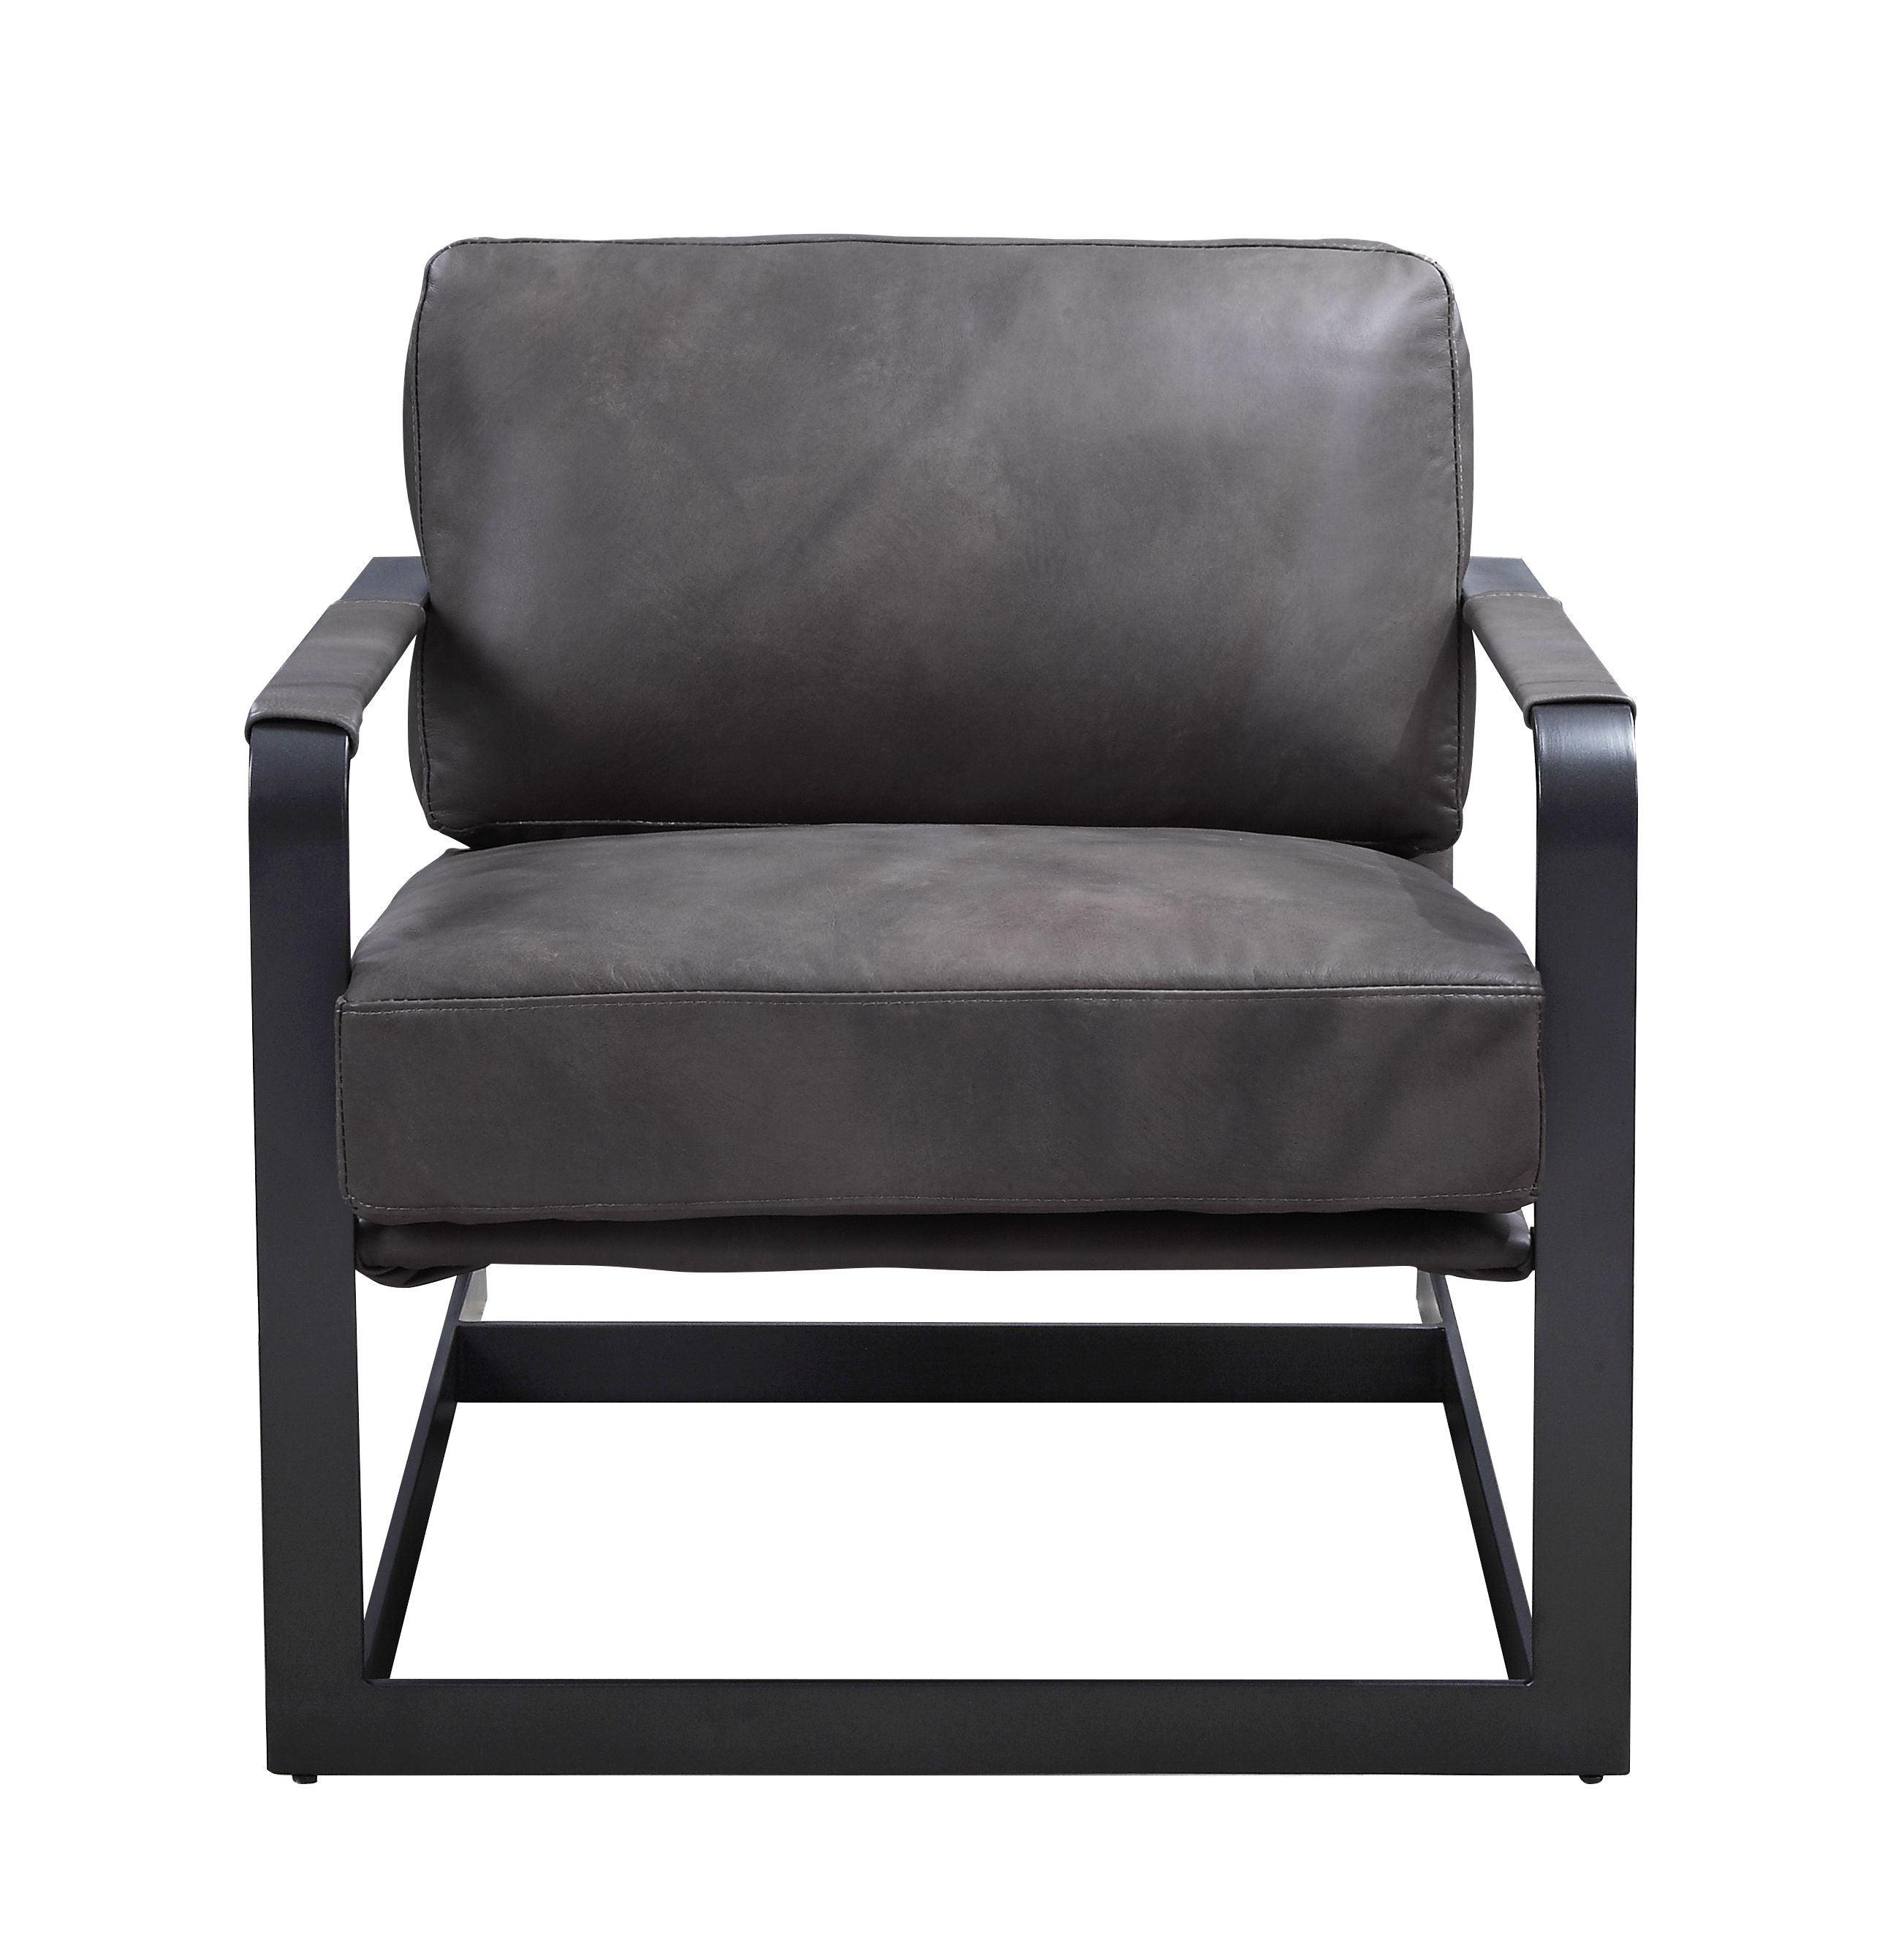 ACME - Locnos - Accent Chair - Gray Top Grain Leather & Black Finish - 5th Avenue Furniture